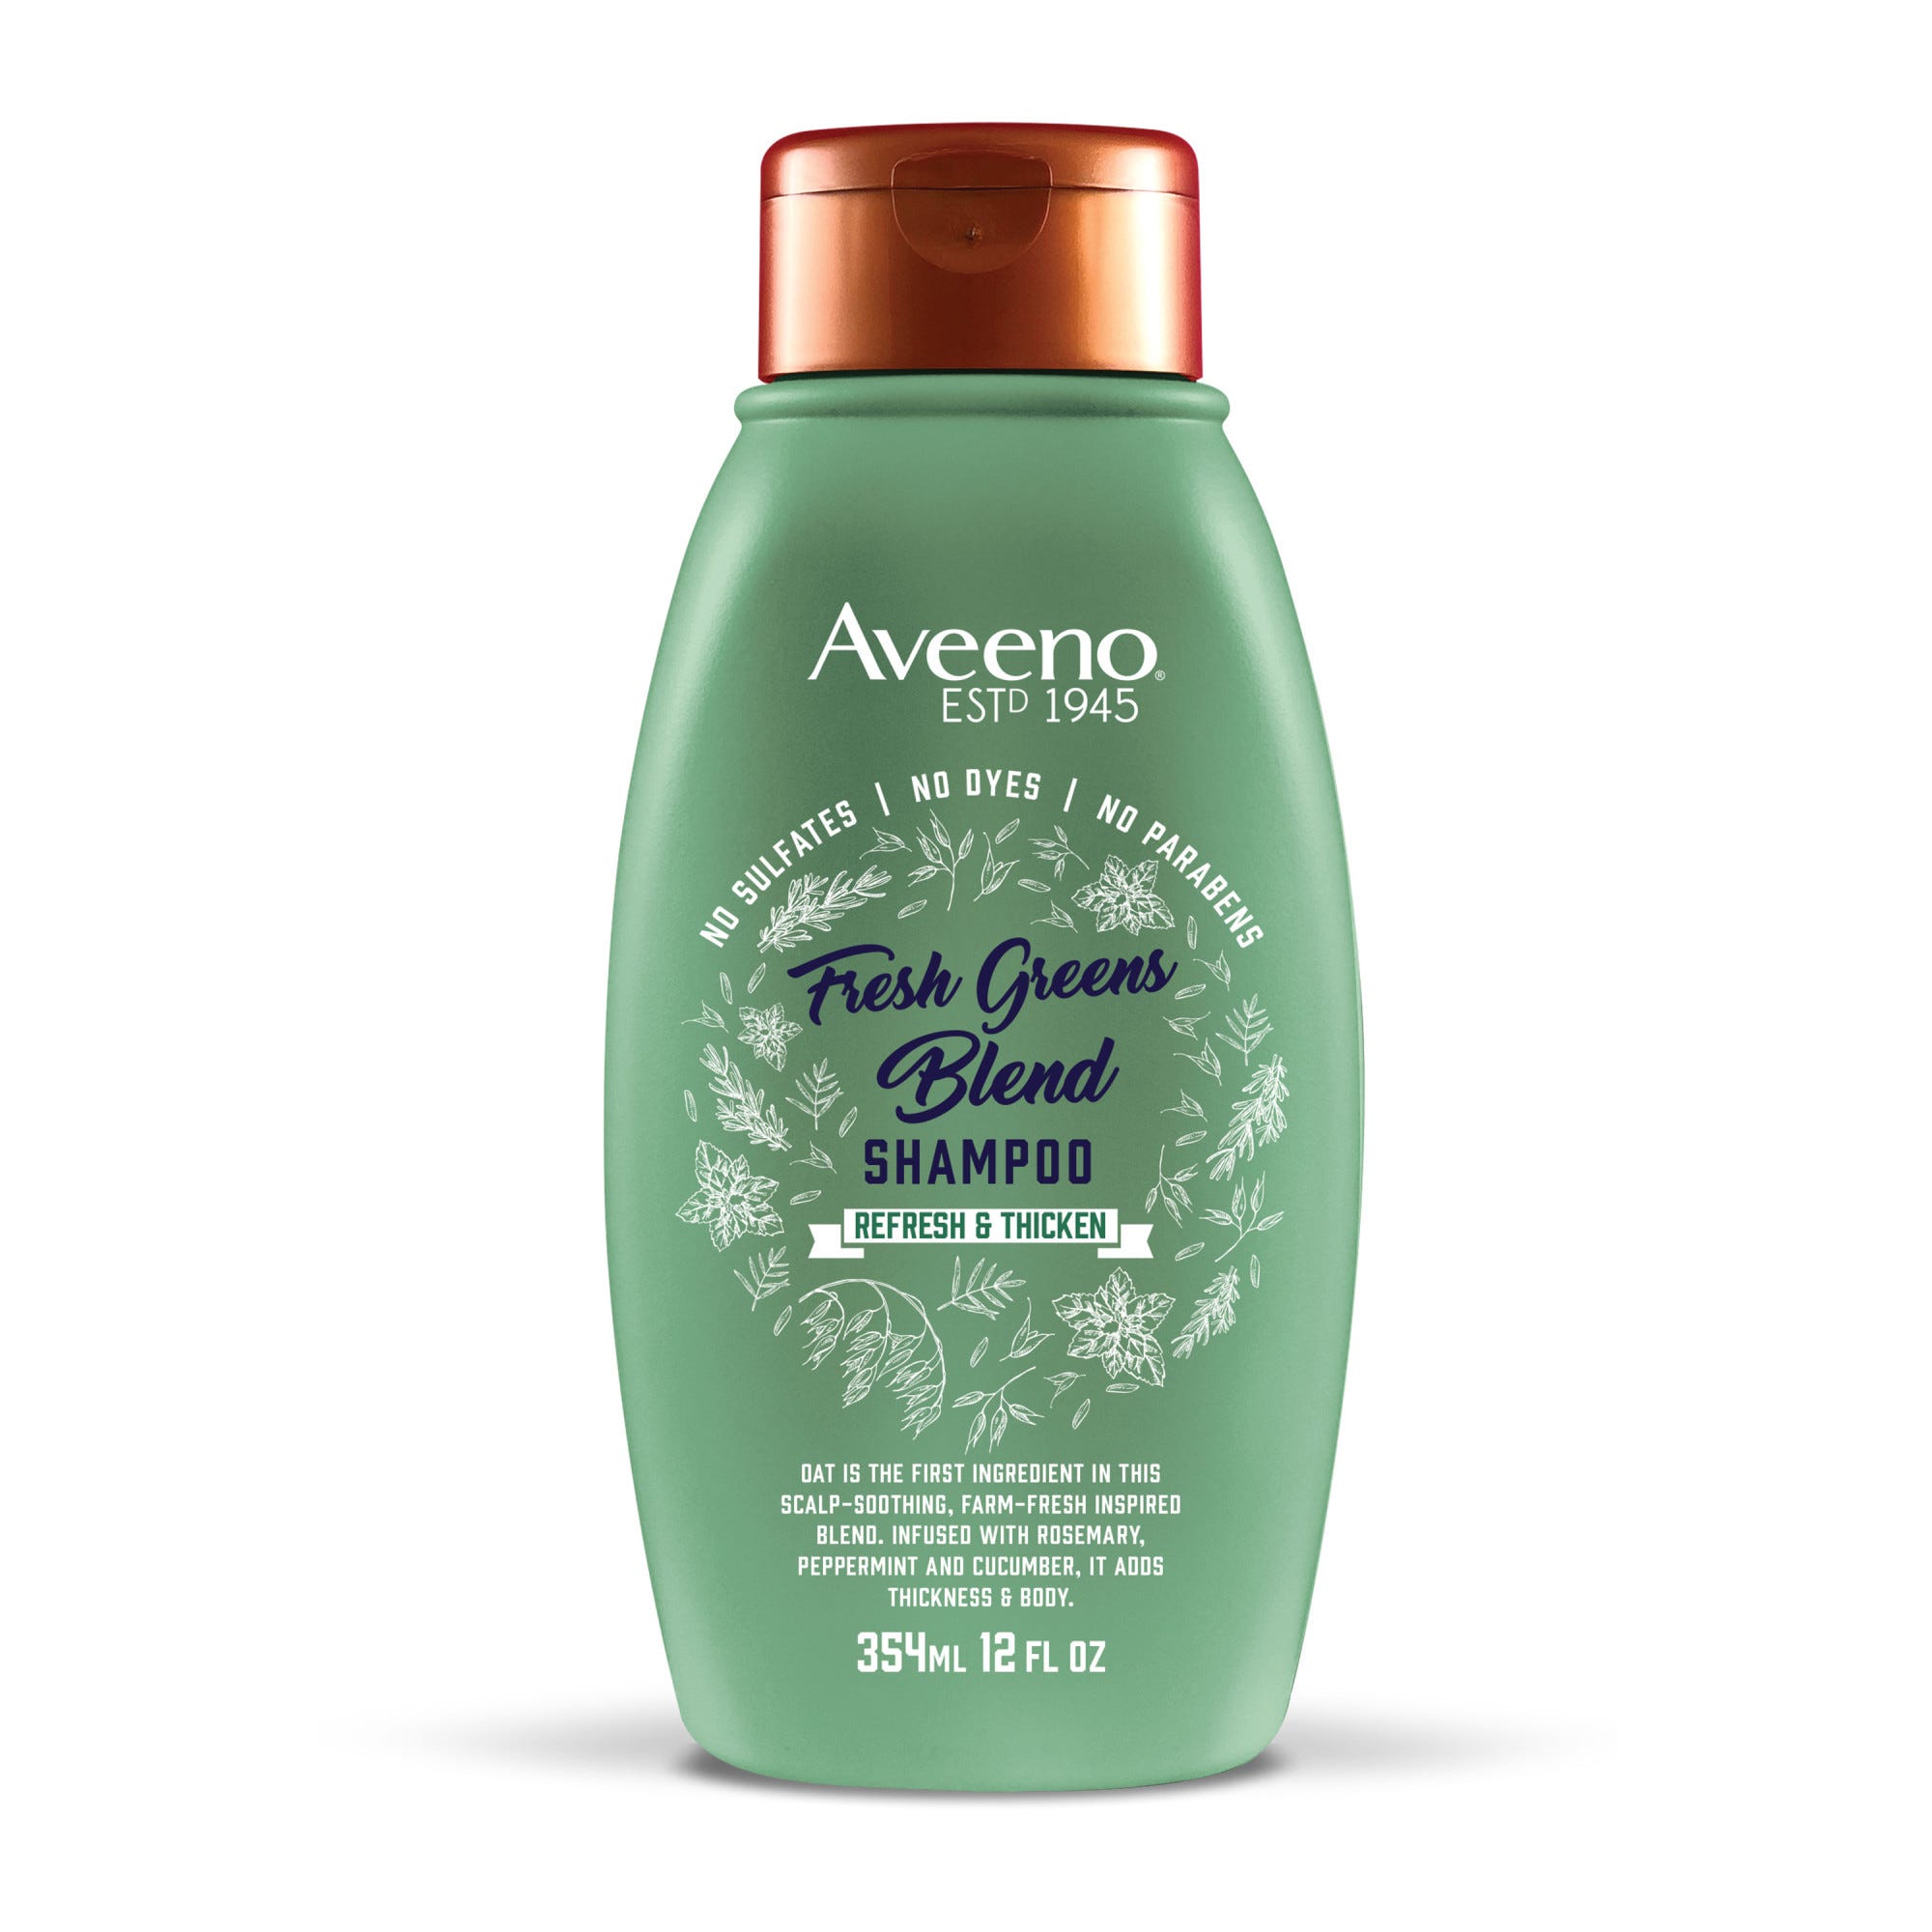 Aveeno Scalp Soothing Fresh Greens Blend Shampoo - 12 fl. oz